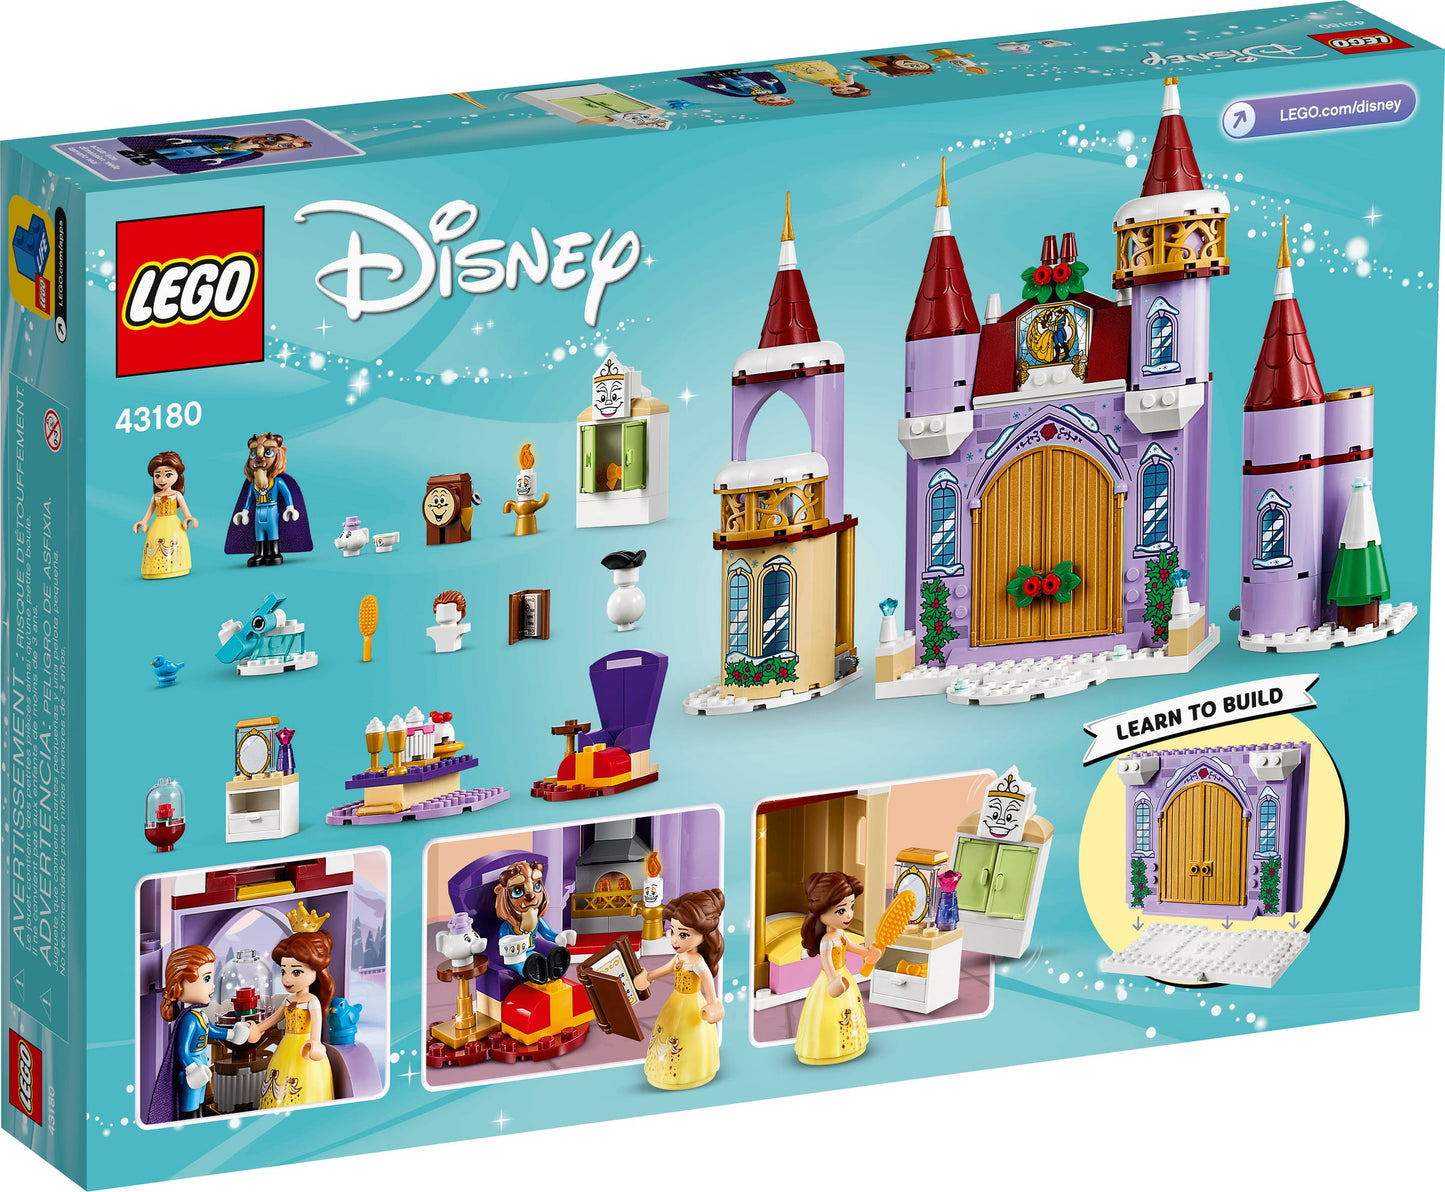 Lego Disney Princess Belle's Castle Winter Celebration 43180